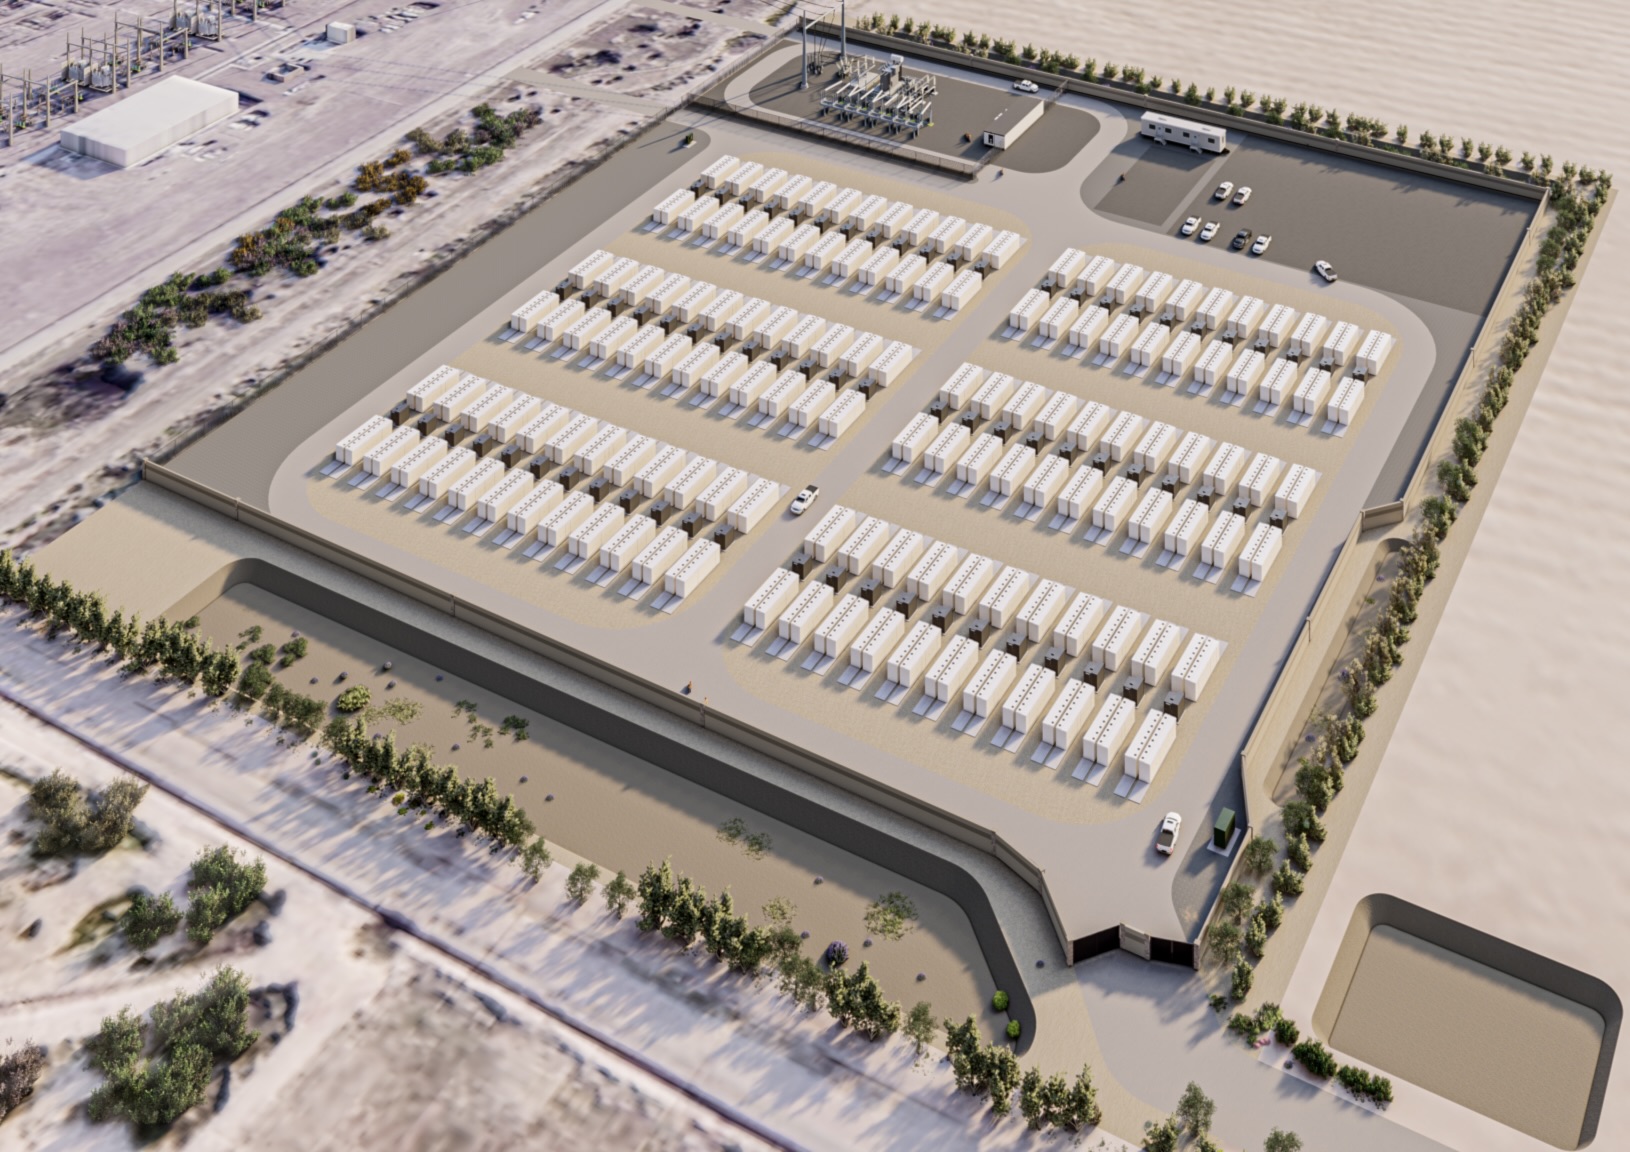 Tesla Megapack project breaks ground Arizona’s largest project yet